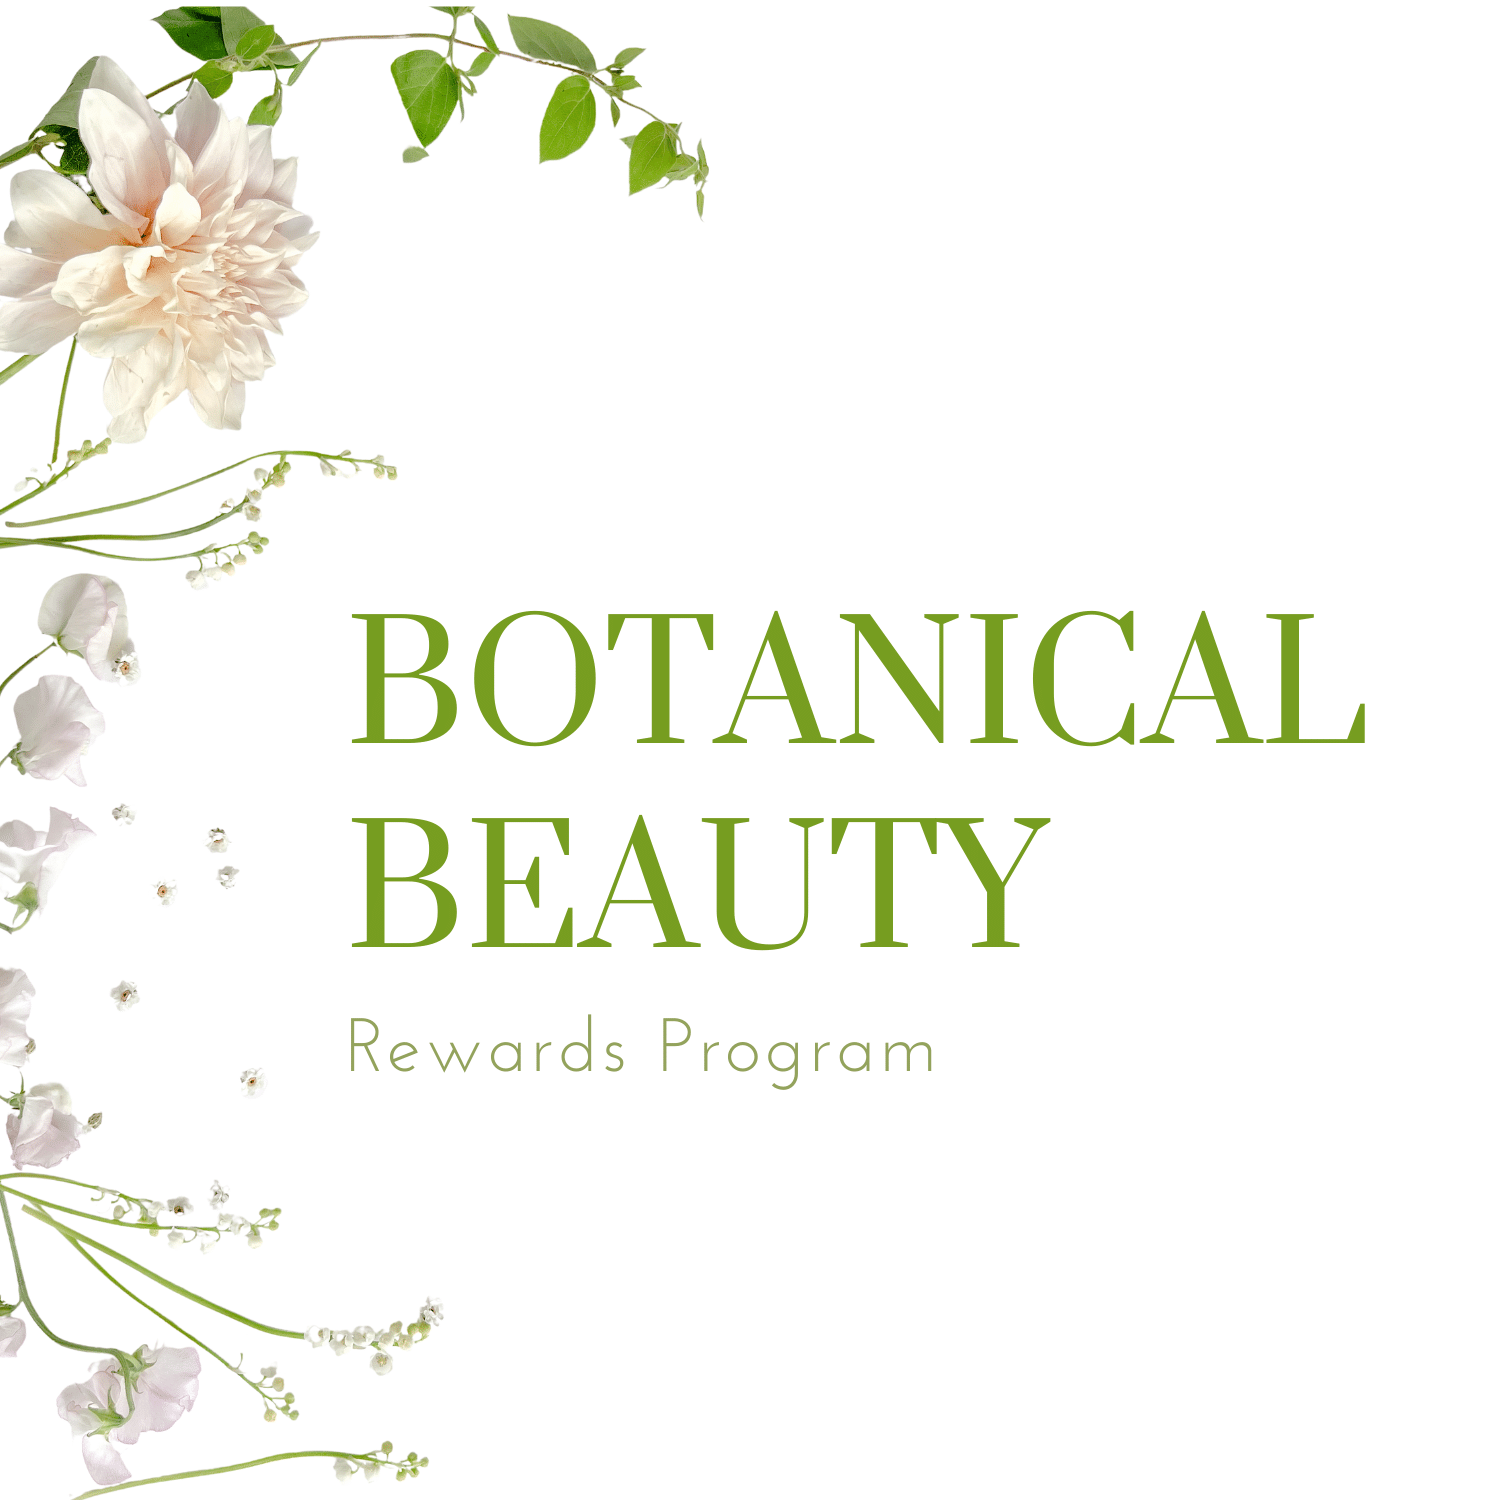 Botanical Beauty Rewards Program Banner